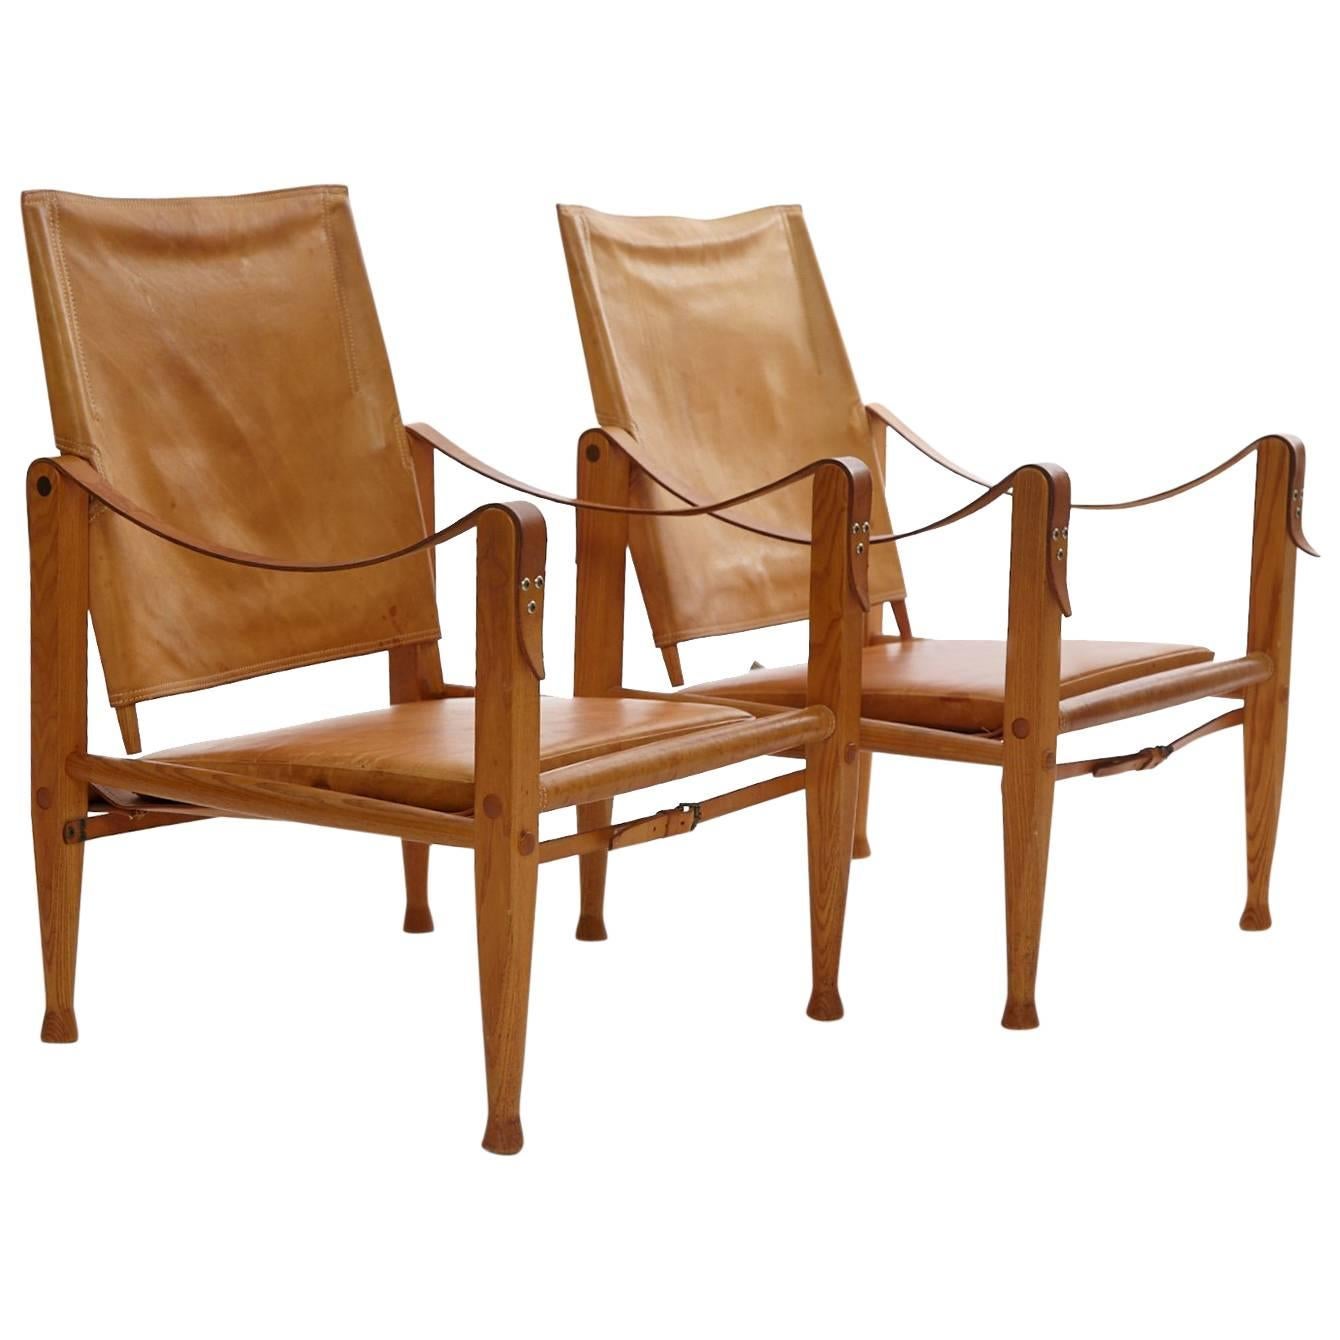 Pair of Kaare Klint Safari Chairs in Tan Leather, Made by Rud Rasmussen, Denmark